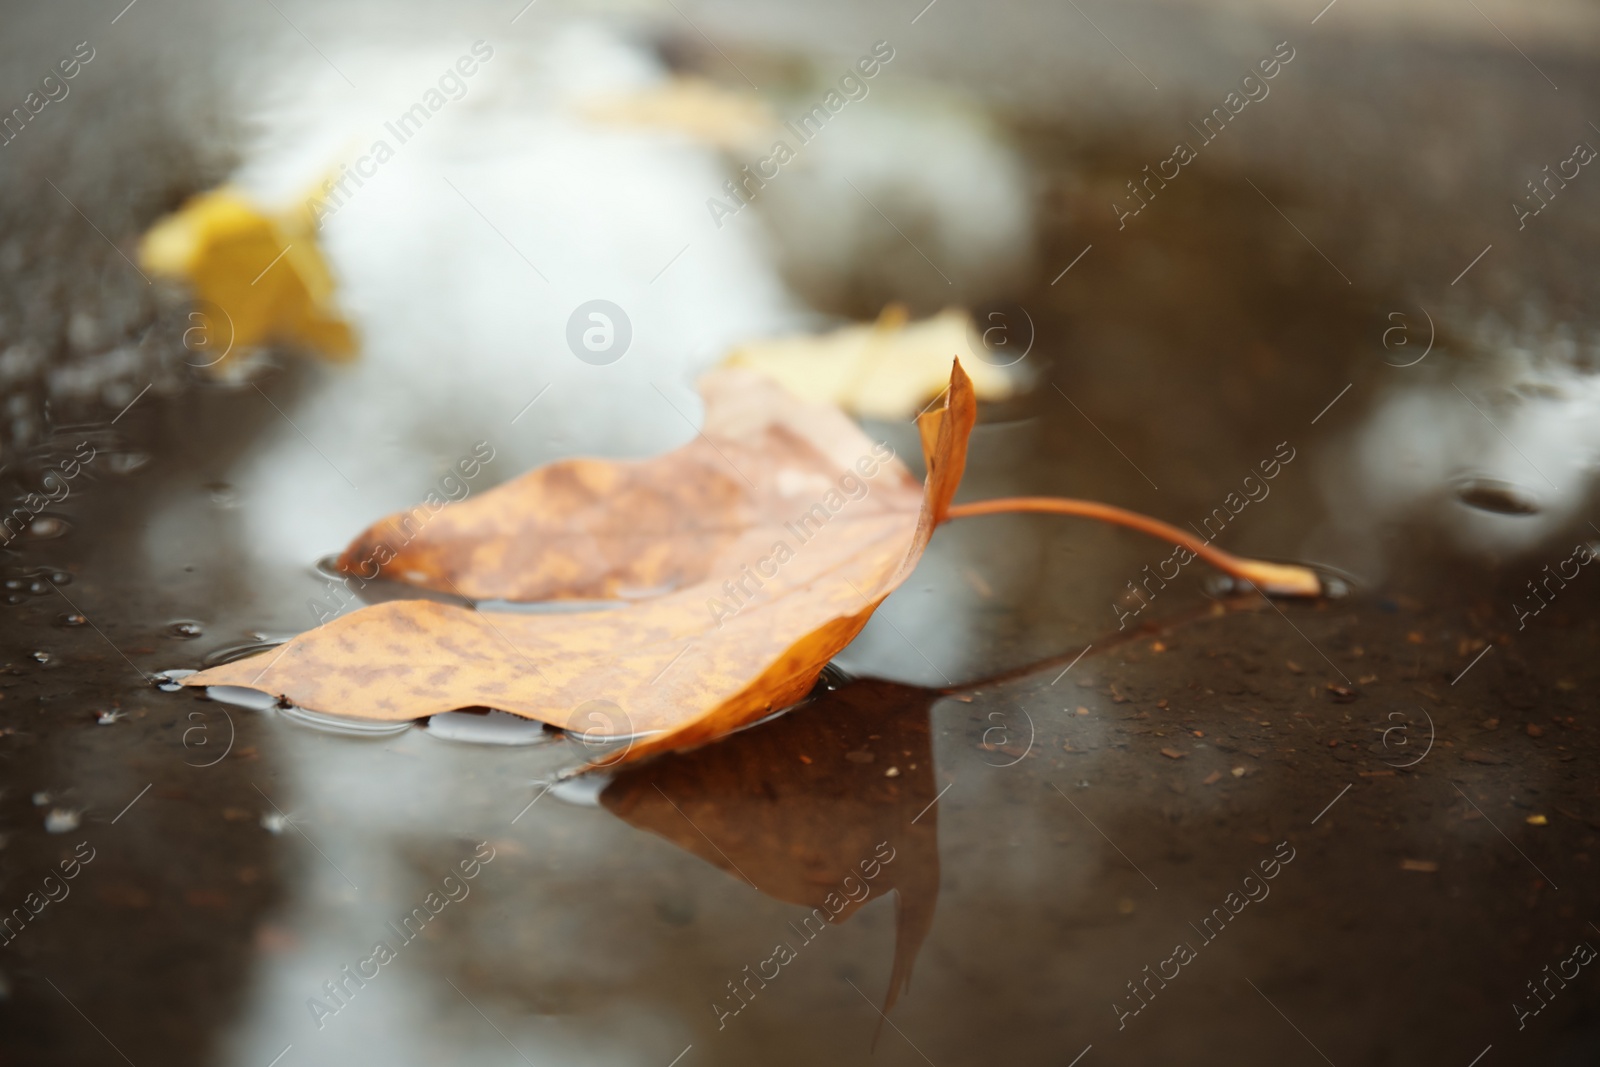 Photo of Autumn leaf in rain puddle on asphalt outdoors